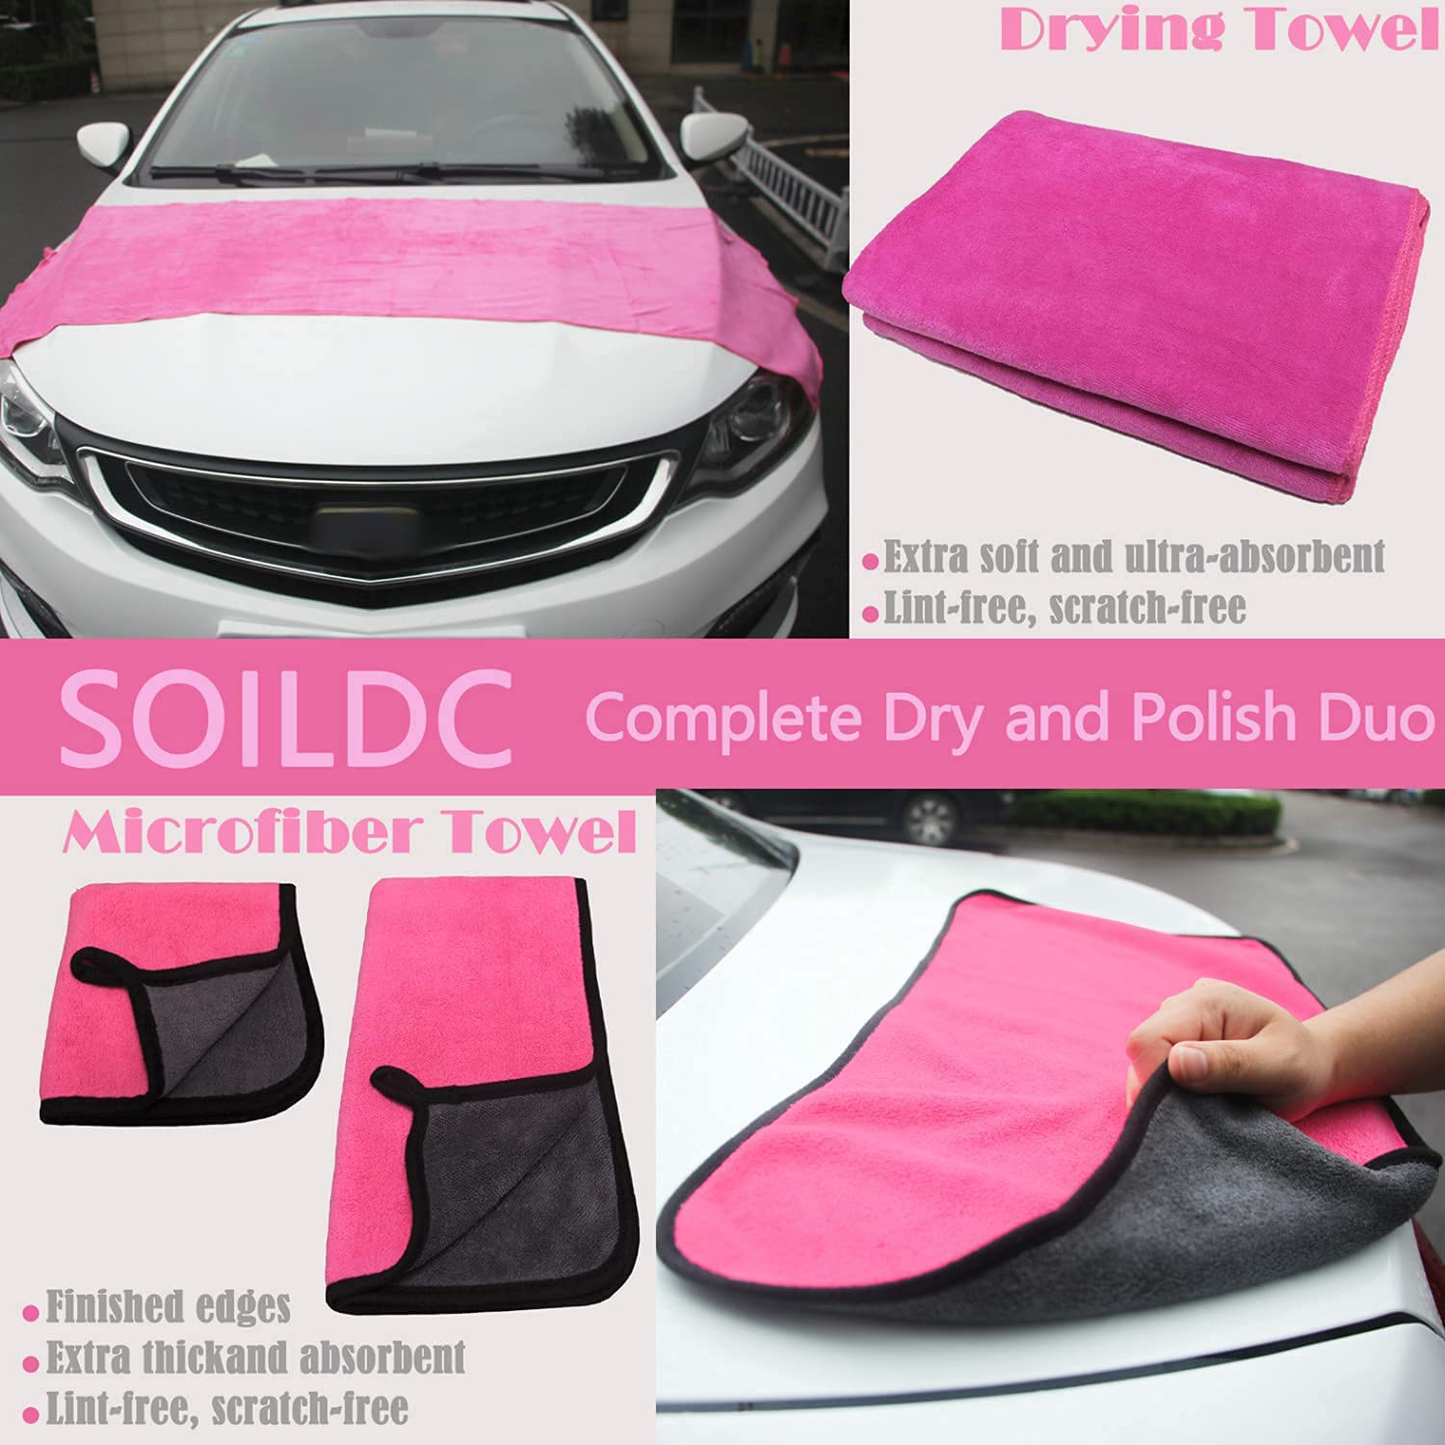 VZIKRK Car Wash Kit, Pink Car Cleaning Kit Interior and Exterior, Cleaning Gel Window Squeegee Duster、Car Washing Sponge Car Washing Mitt Microfiber Towels Wax Applicator Wheel Brush(17pcs)